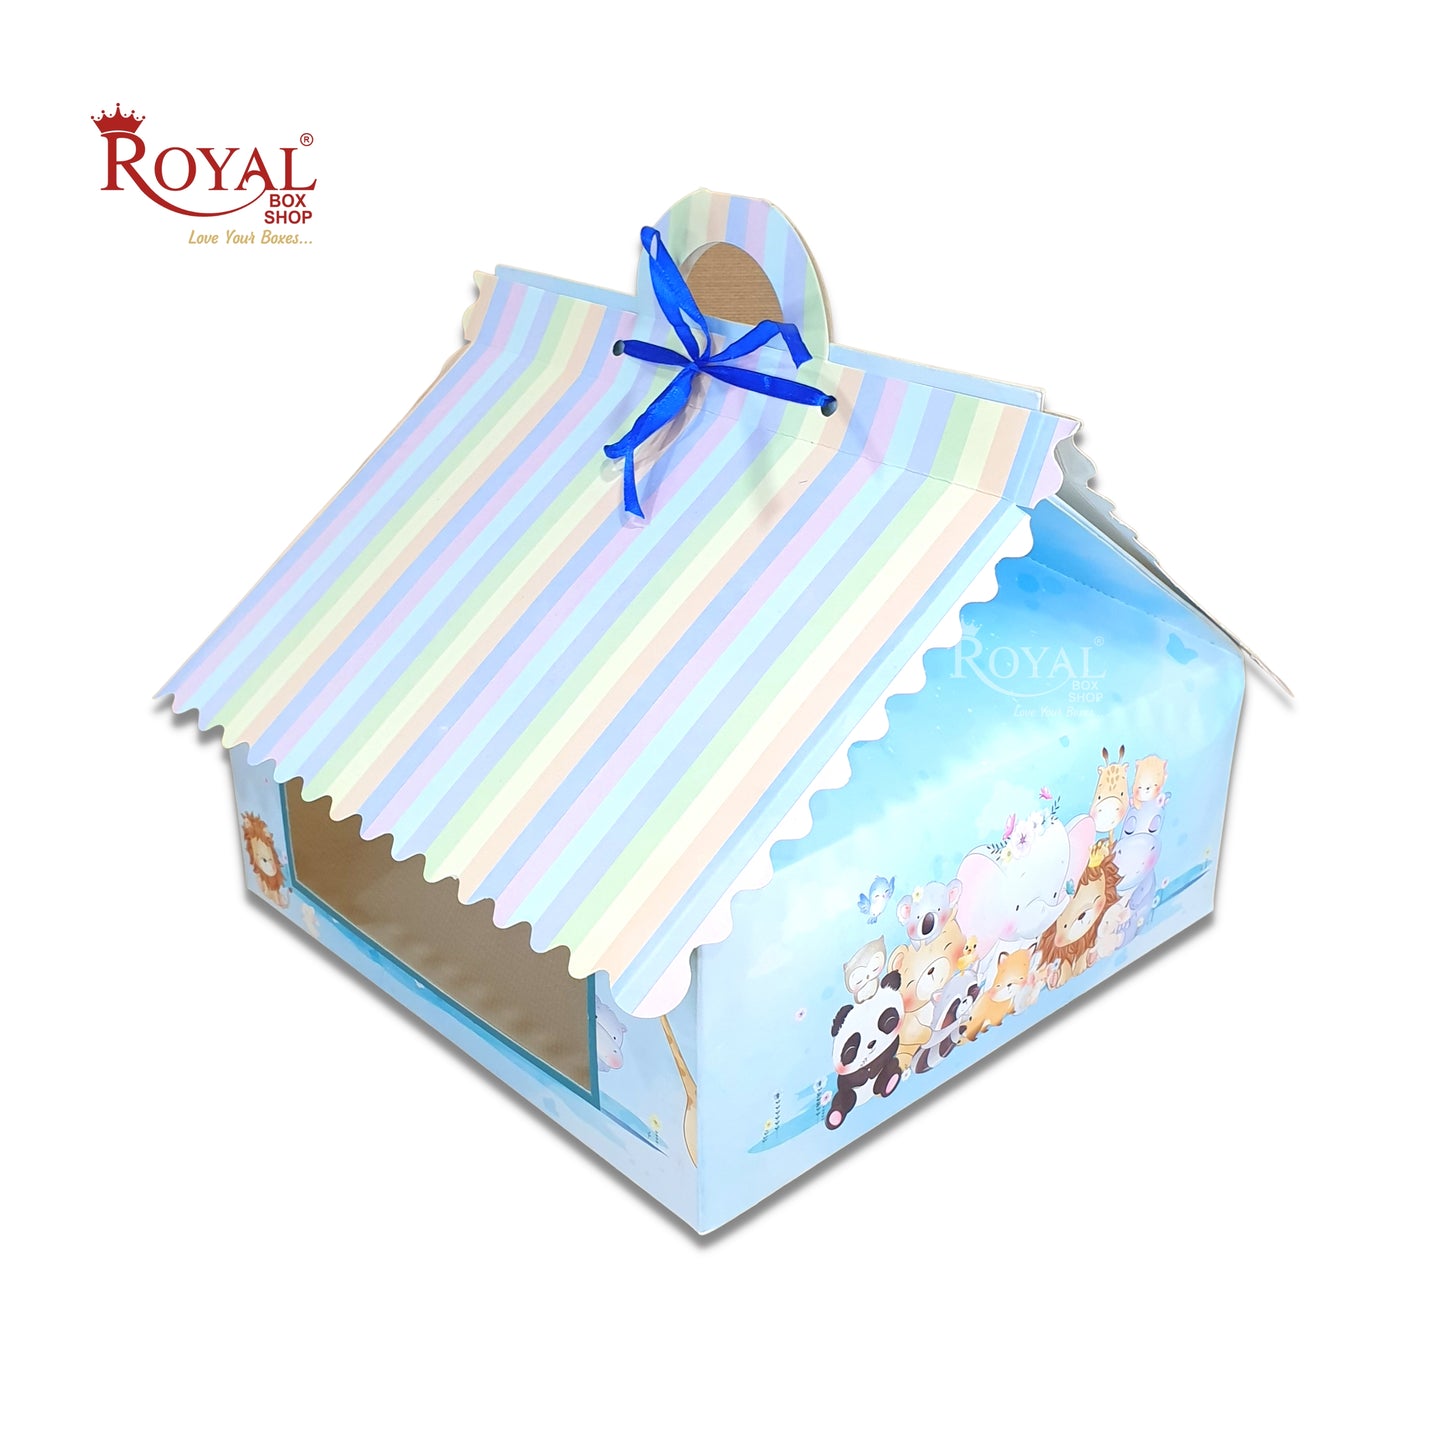 RoyalBoxShop® 9cc Hut Shape Cupcake Boxes I 10"x10"x4" inch I Zoo Theme